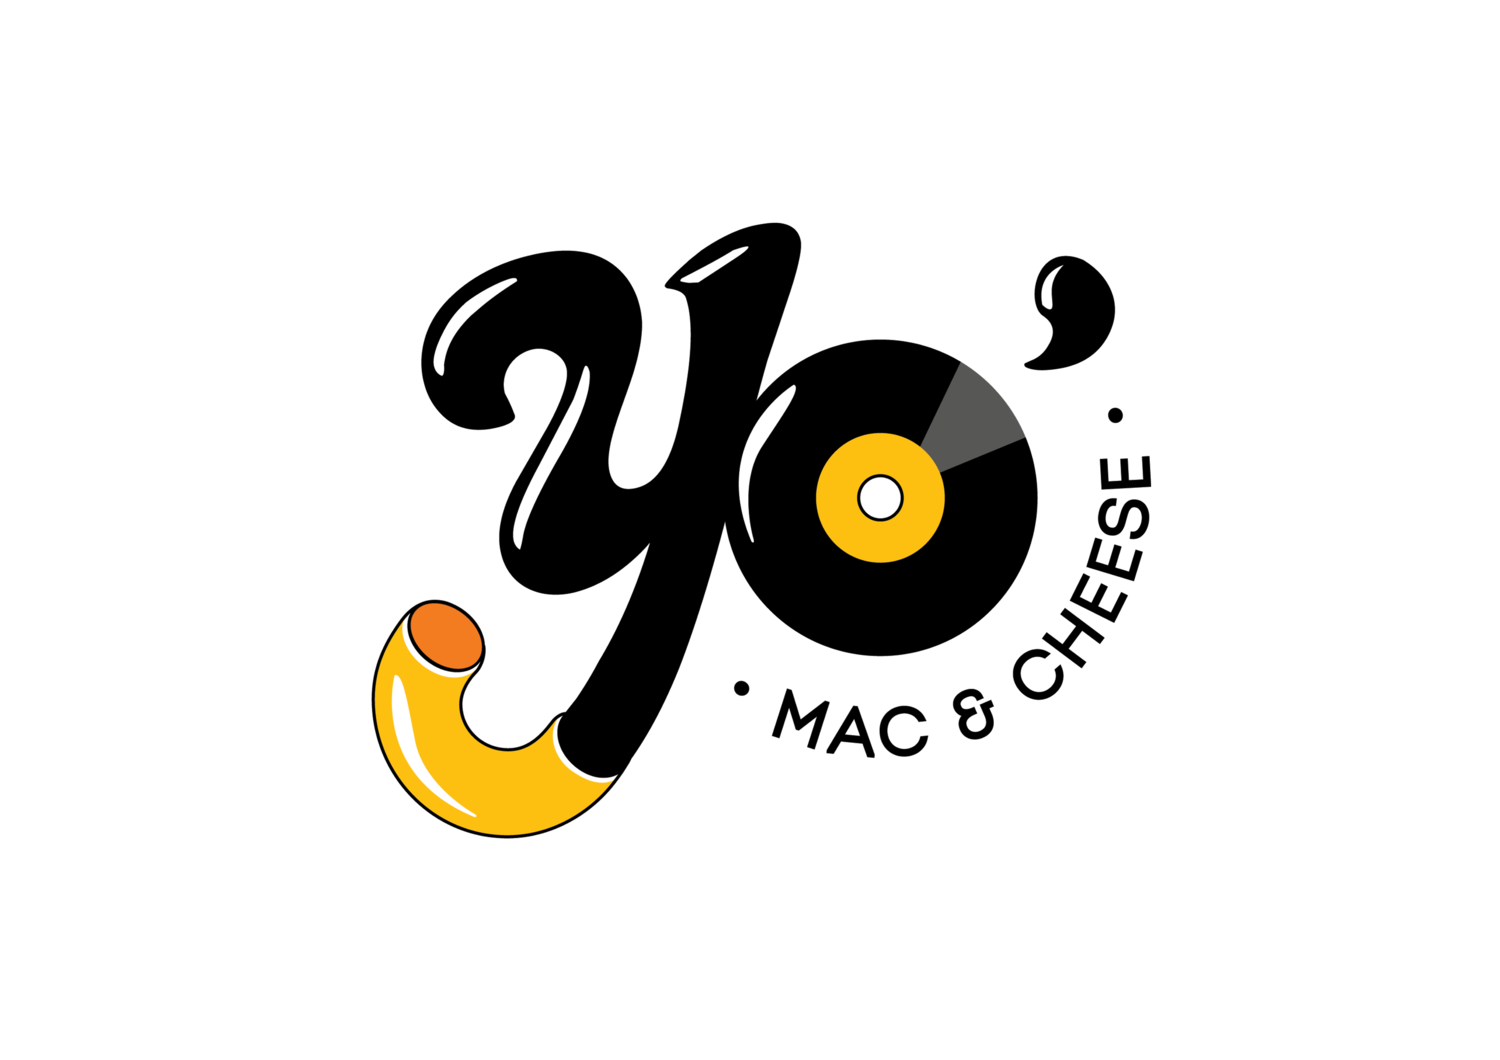 Чиз видео. YOYO логотип. Mac & Cheese лого. Or логотип.